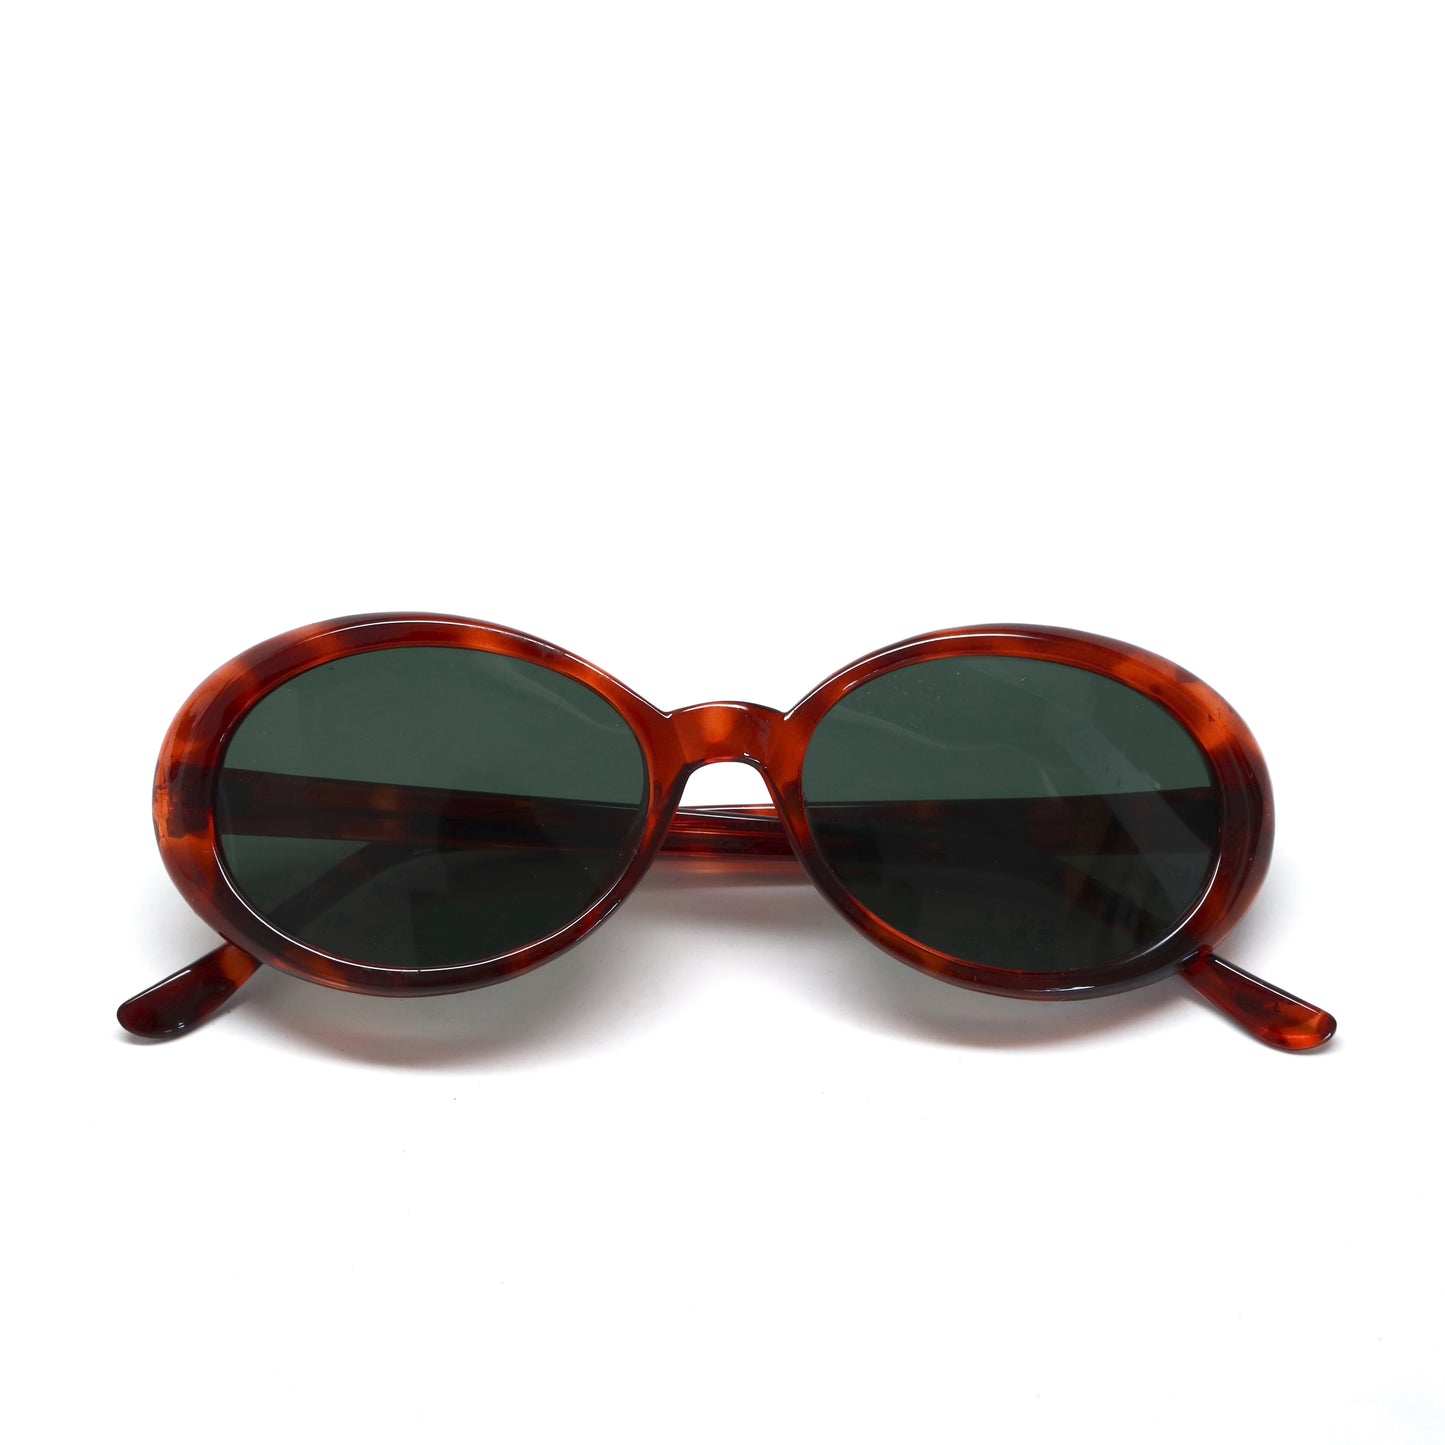 Vintage Standard Size 90s Mod Original Hermosa Oval Sunglasses - Tortoise